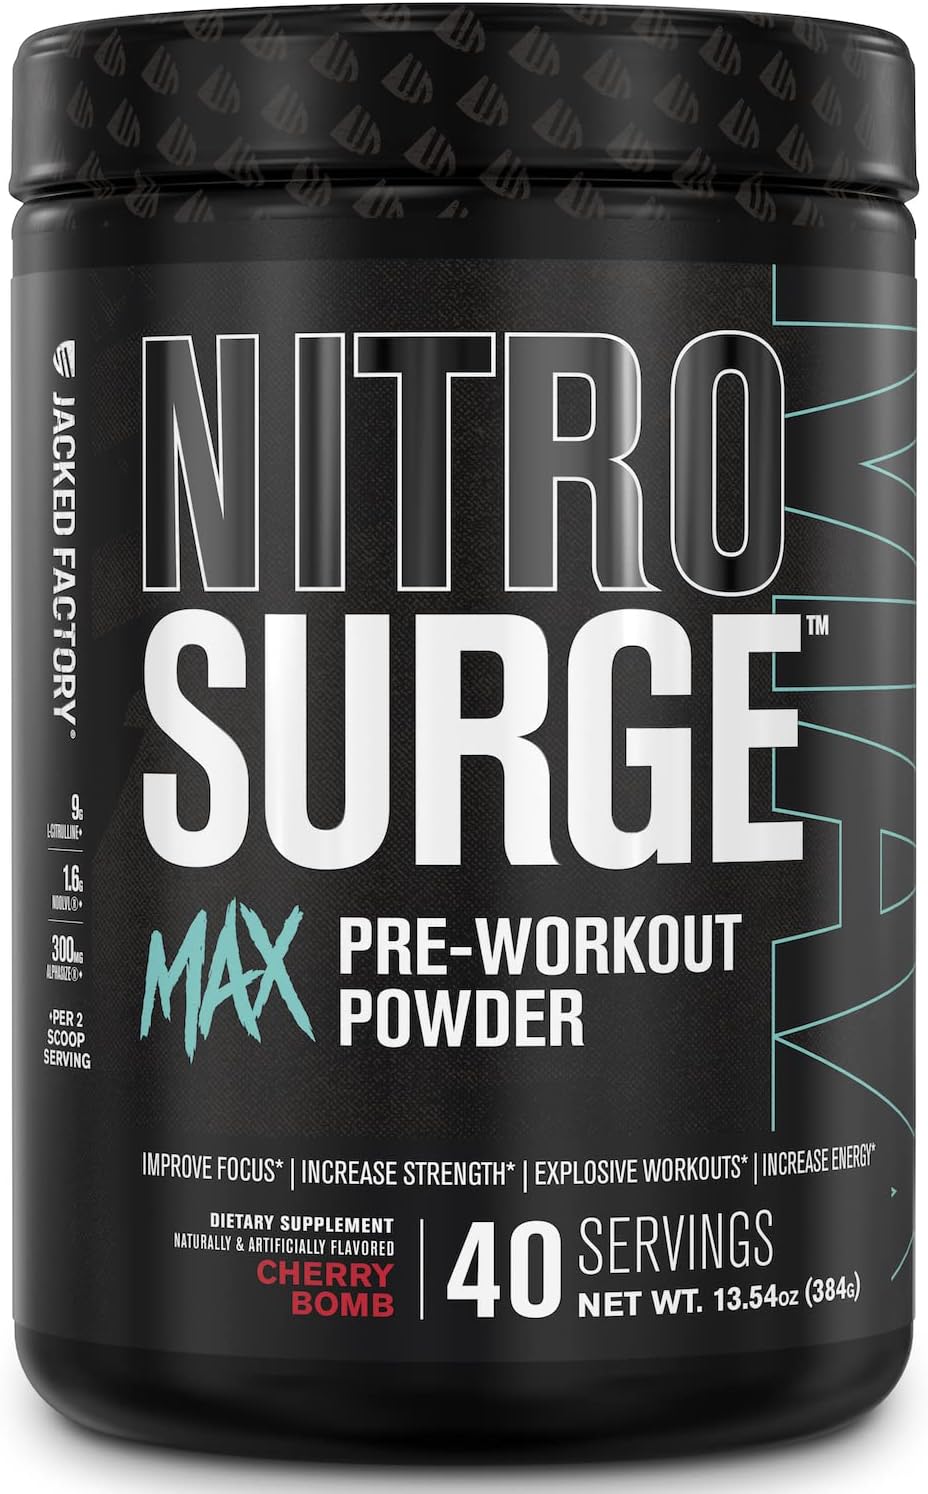 Jacked Factory Nitrosurge Max Nootropic Pre Workout Powder - Premium P